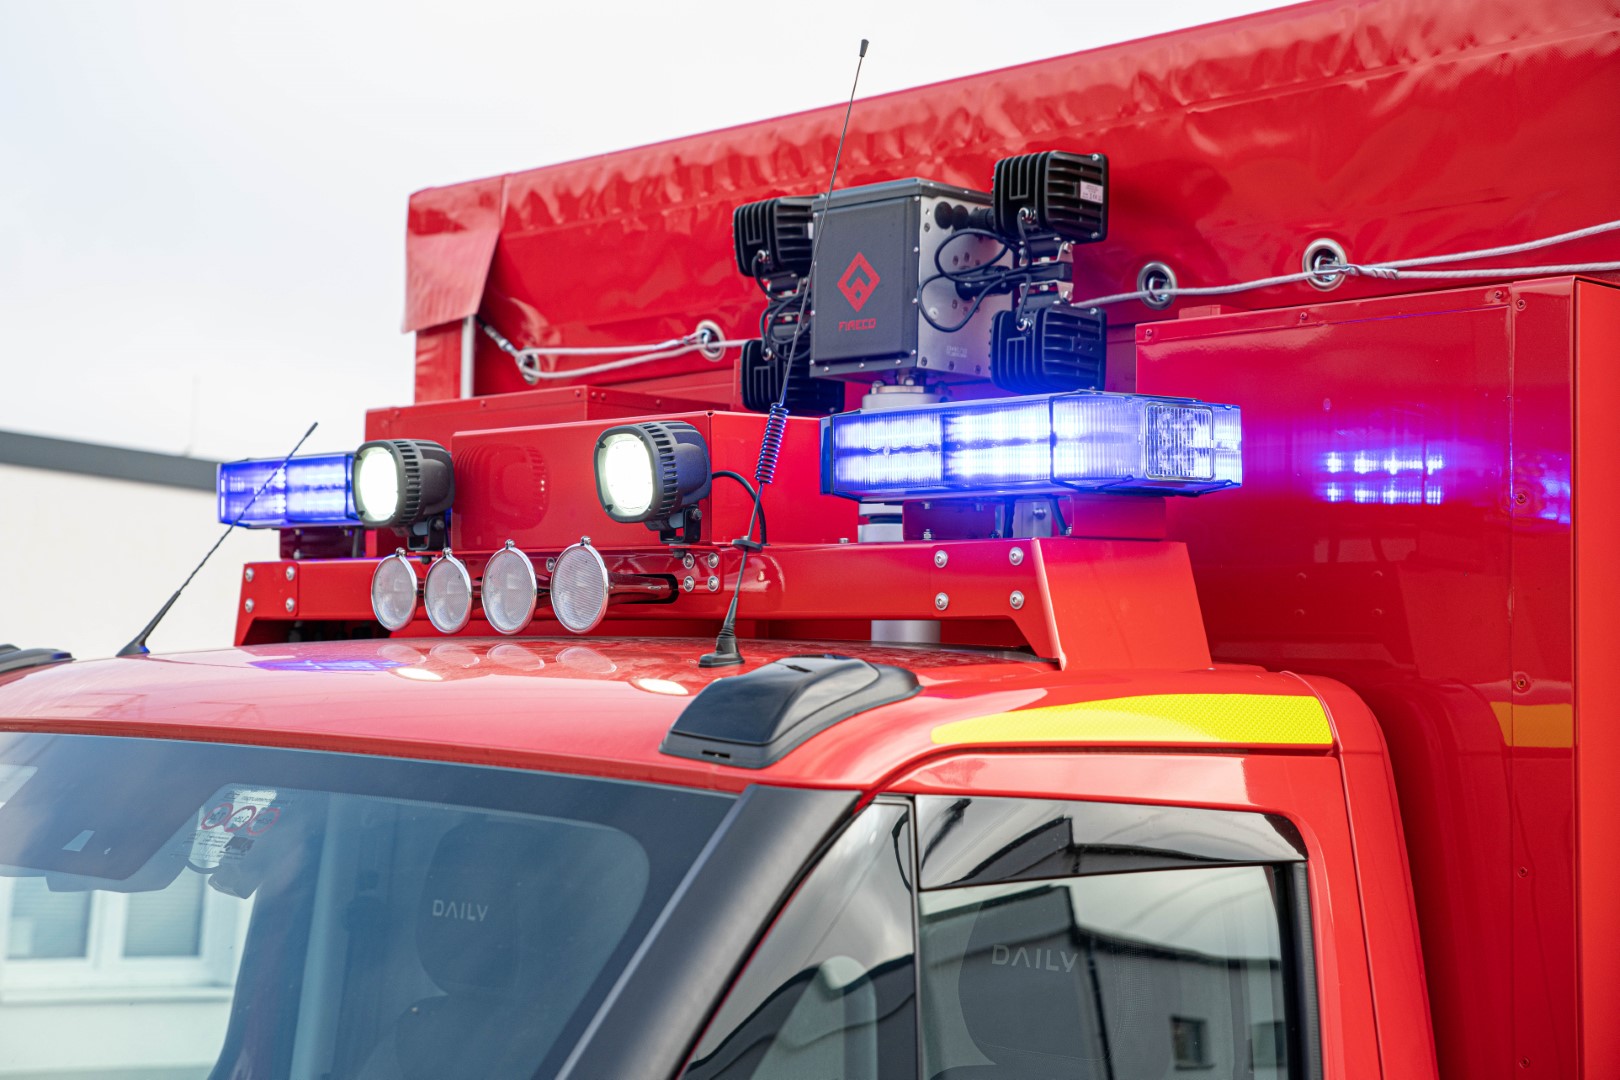 Gerätewagen Logistik Feuerwehr Langenhagen, GW-L1, Iveco Daily